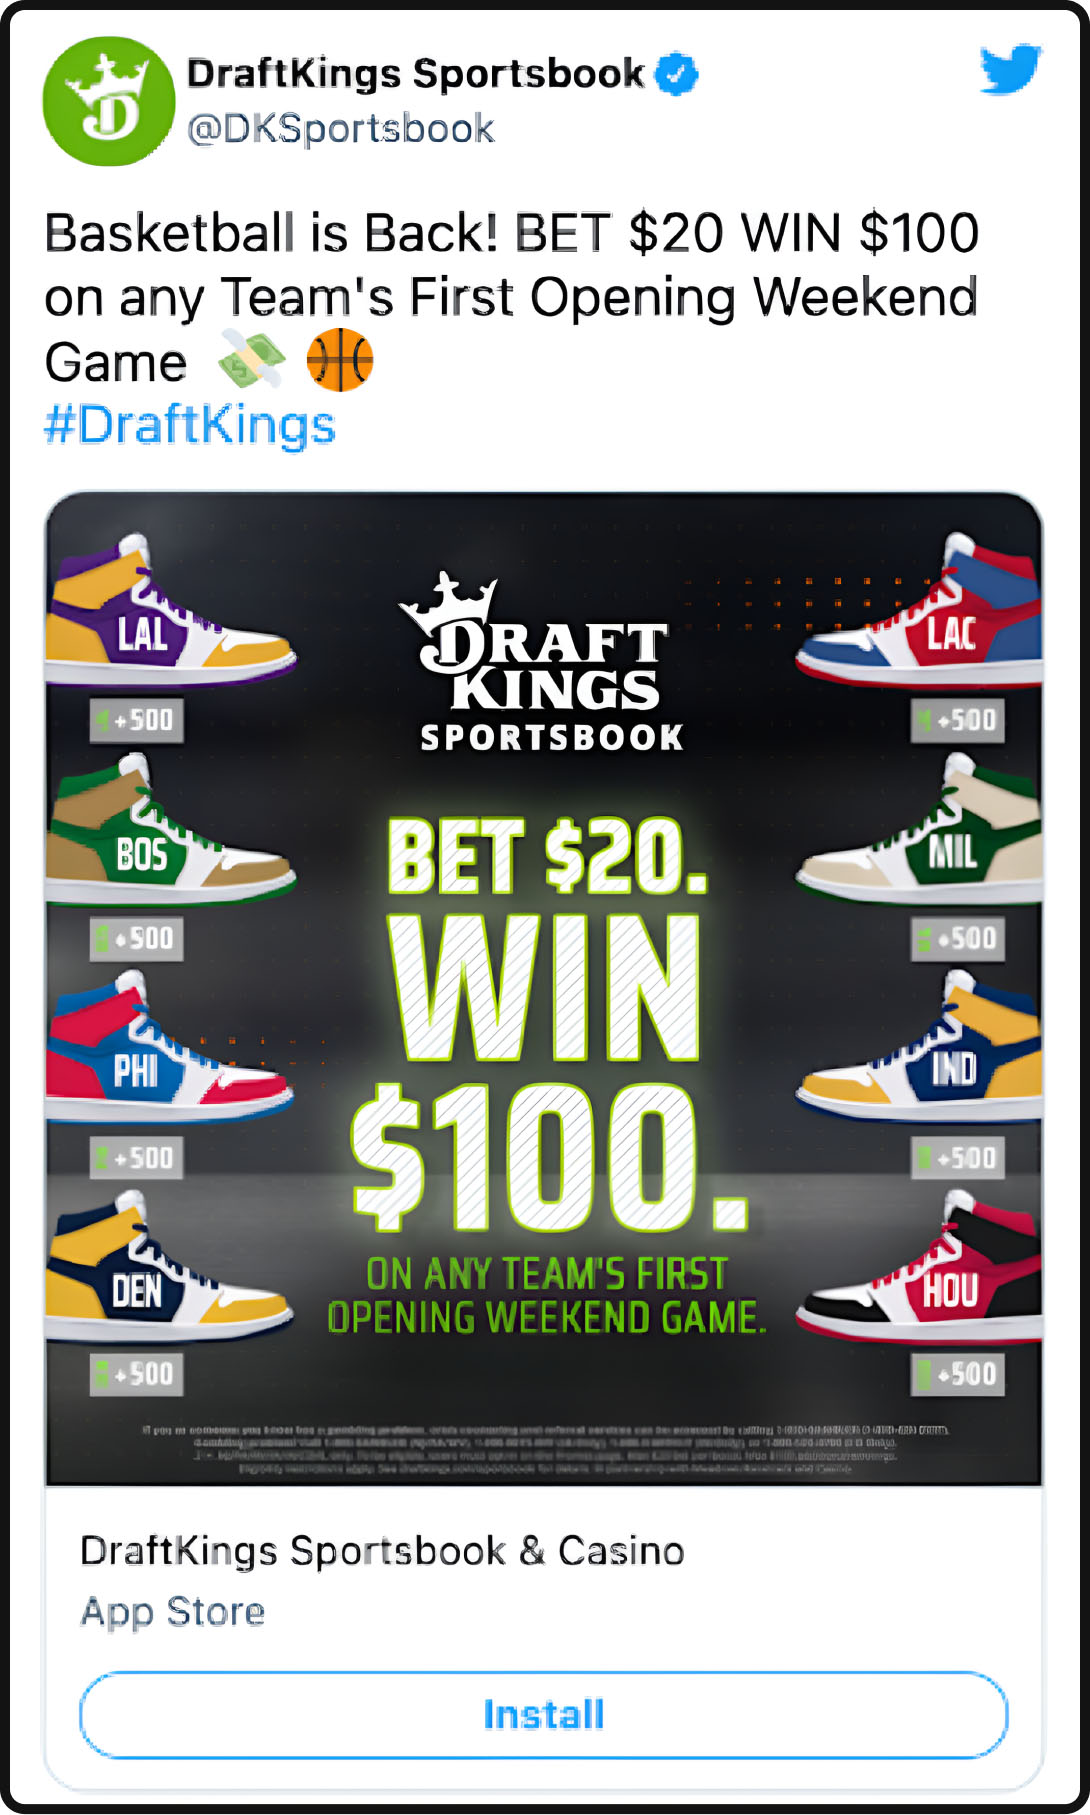 DraftKings Sportsbook Twitter Ad